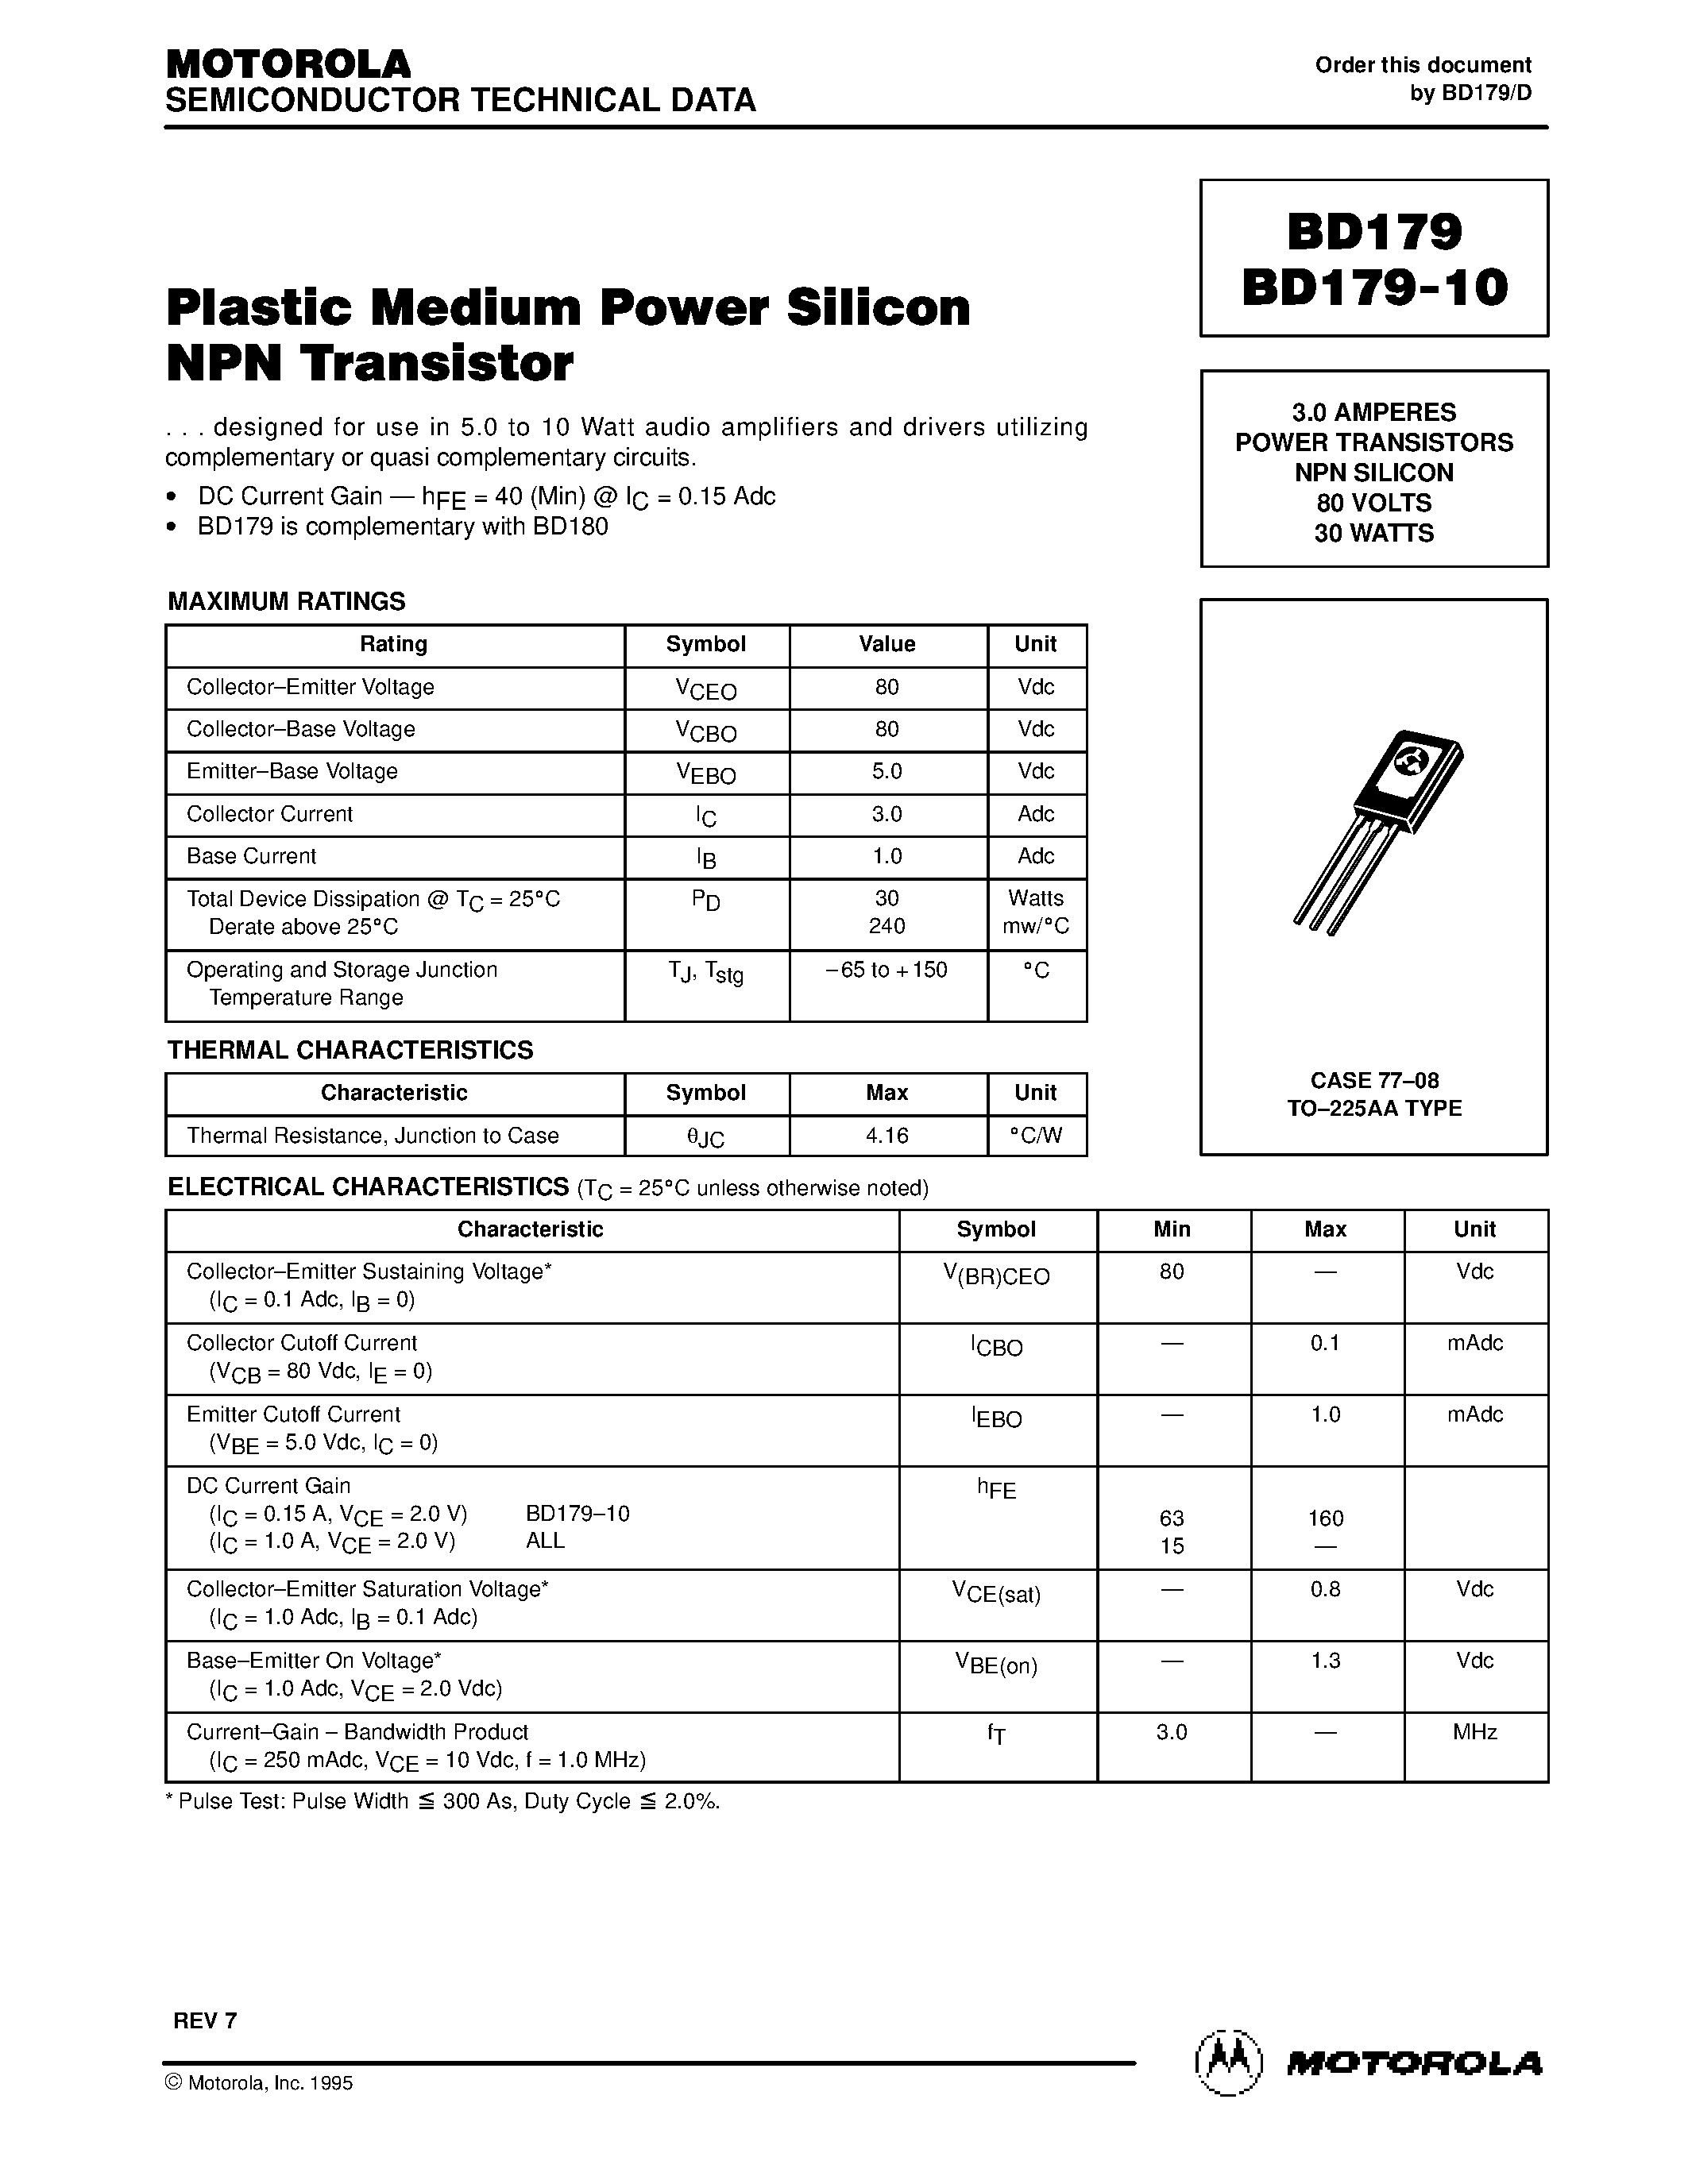 Datasheet BD179-10 - POWER TRANSISTORS NPN SILICON page 1